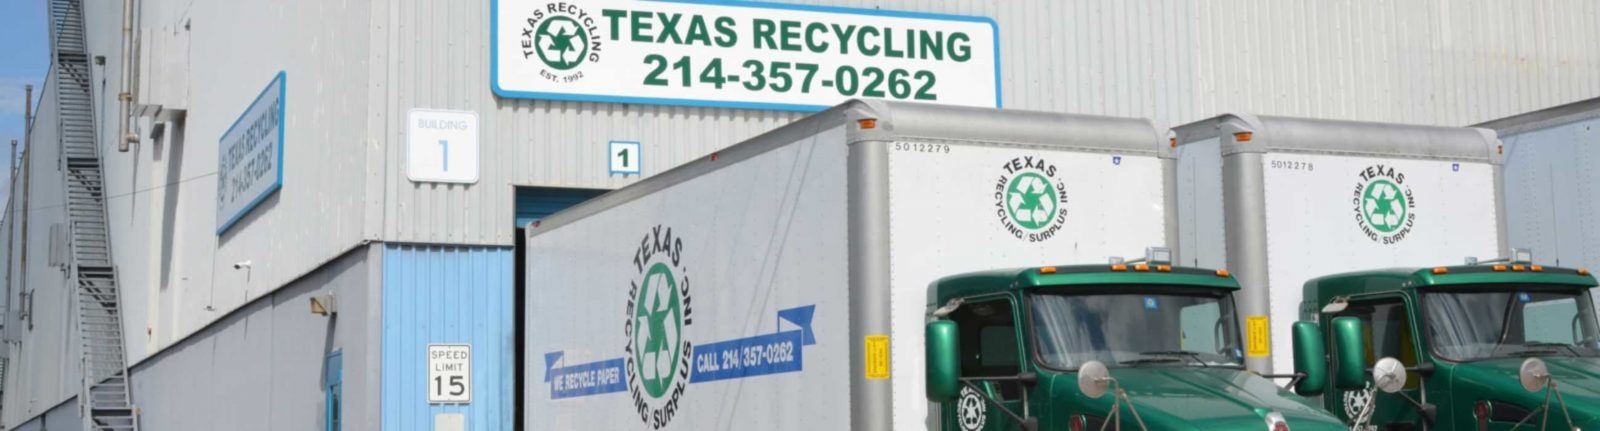 Metal-Recycling-Dallas_TxR-Slider-Trucks